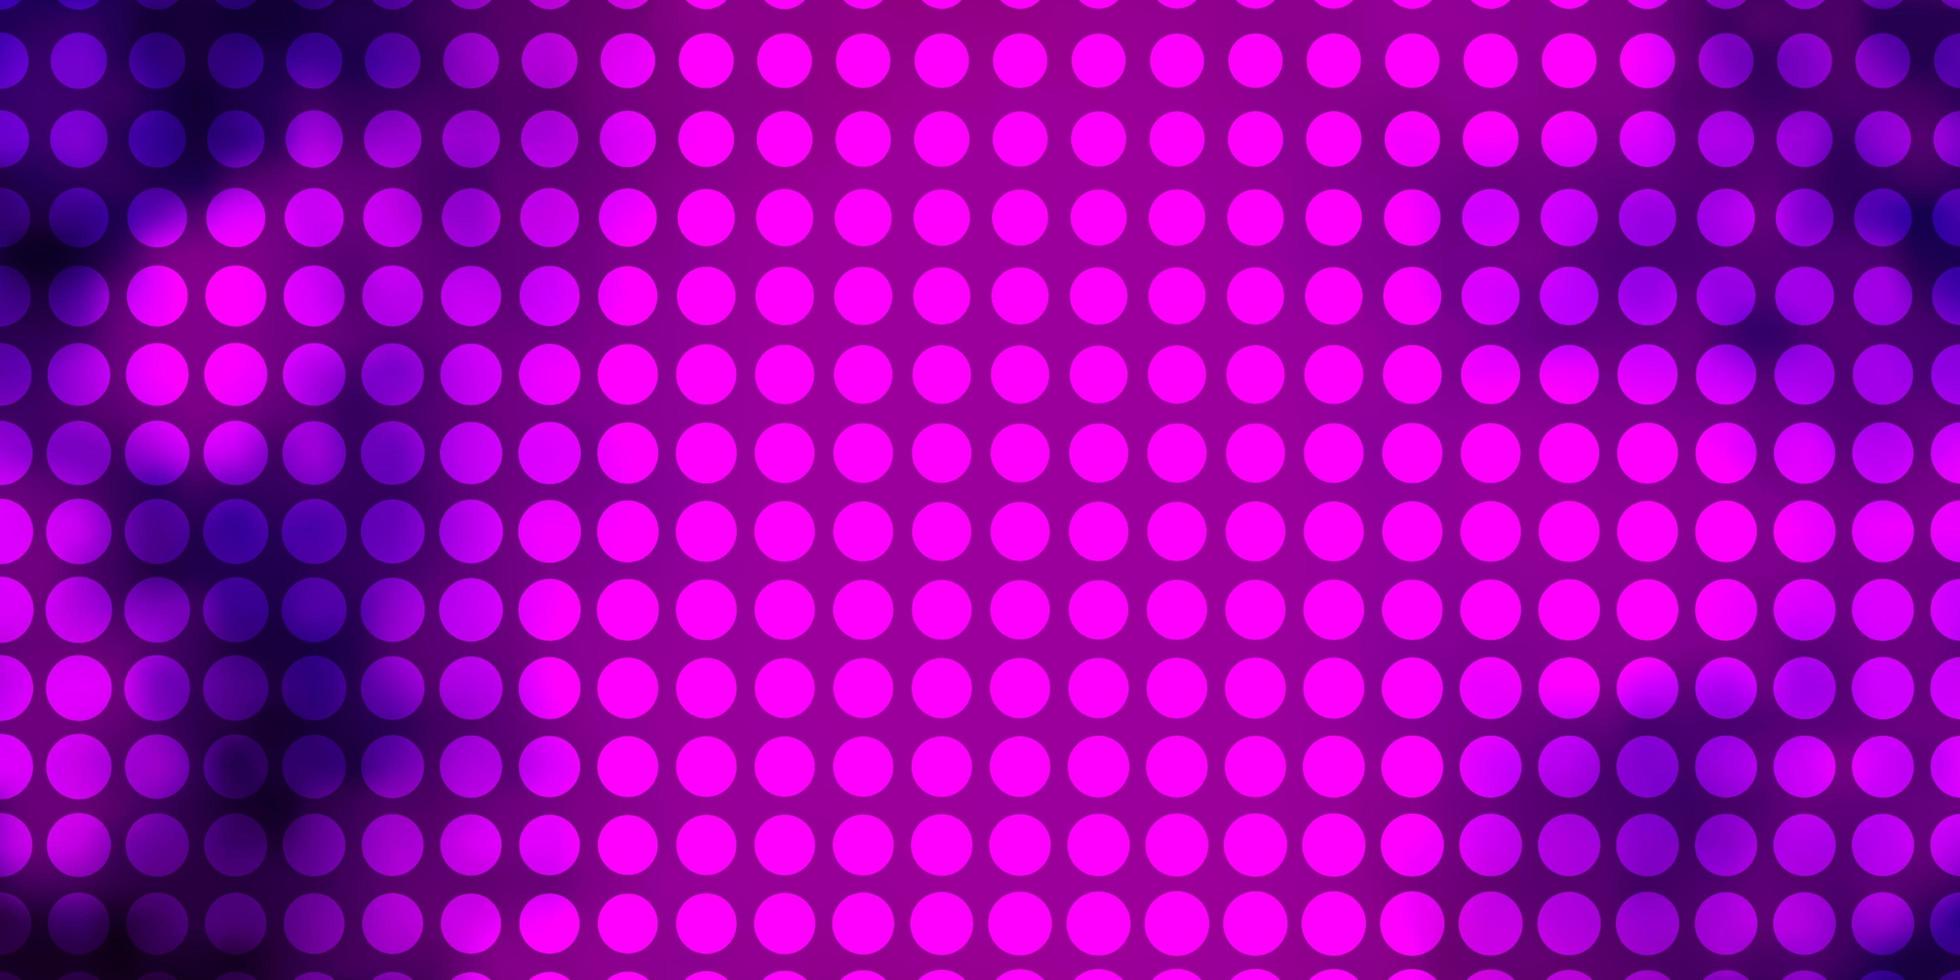 patrón de vector púrpura oscuro con círculos.